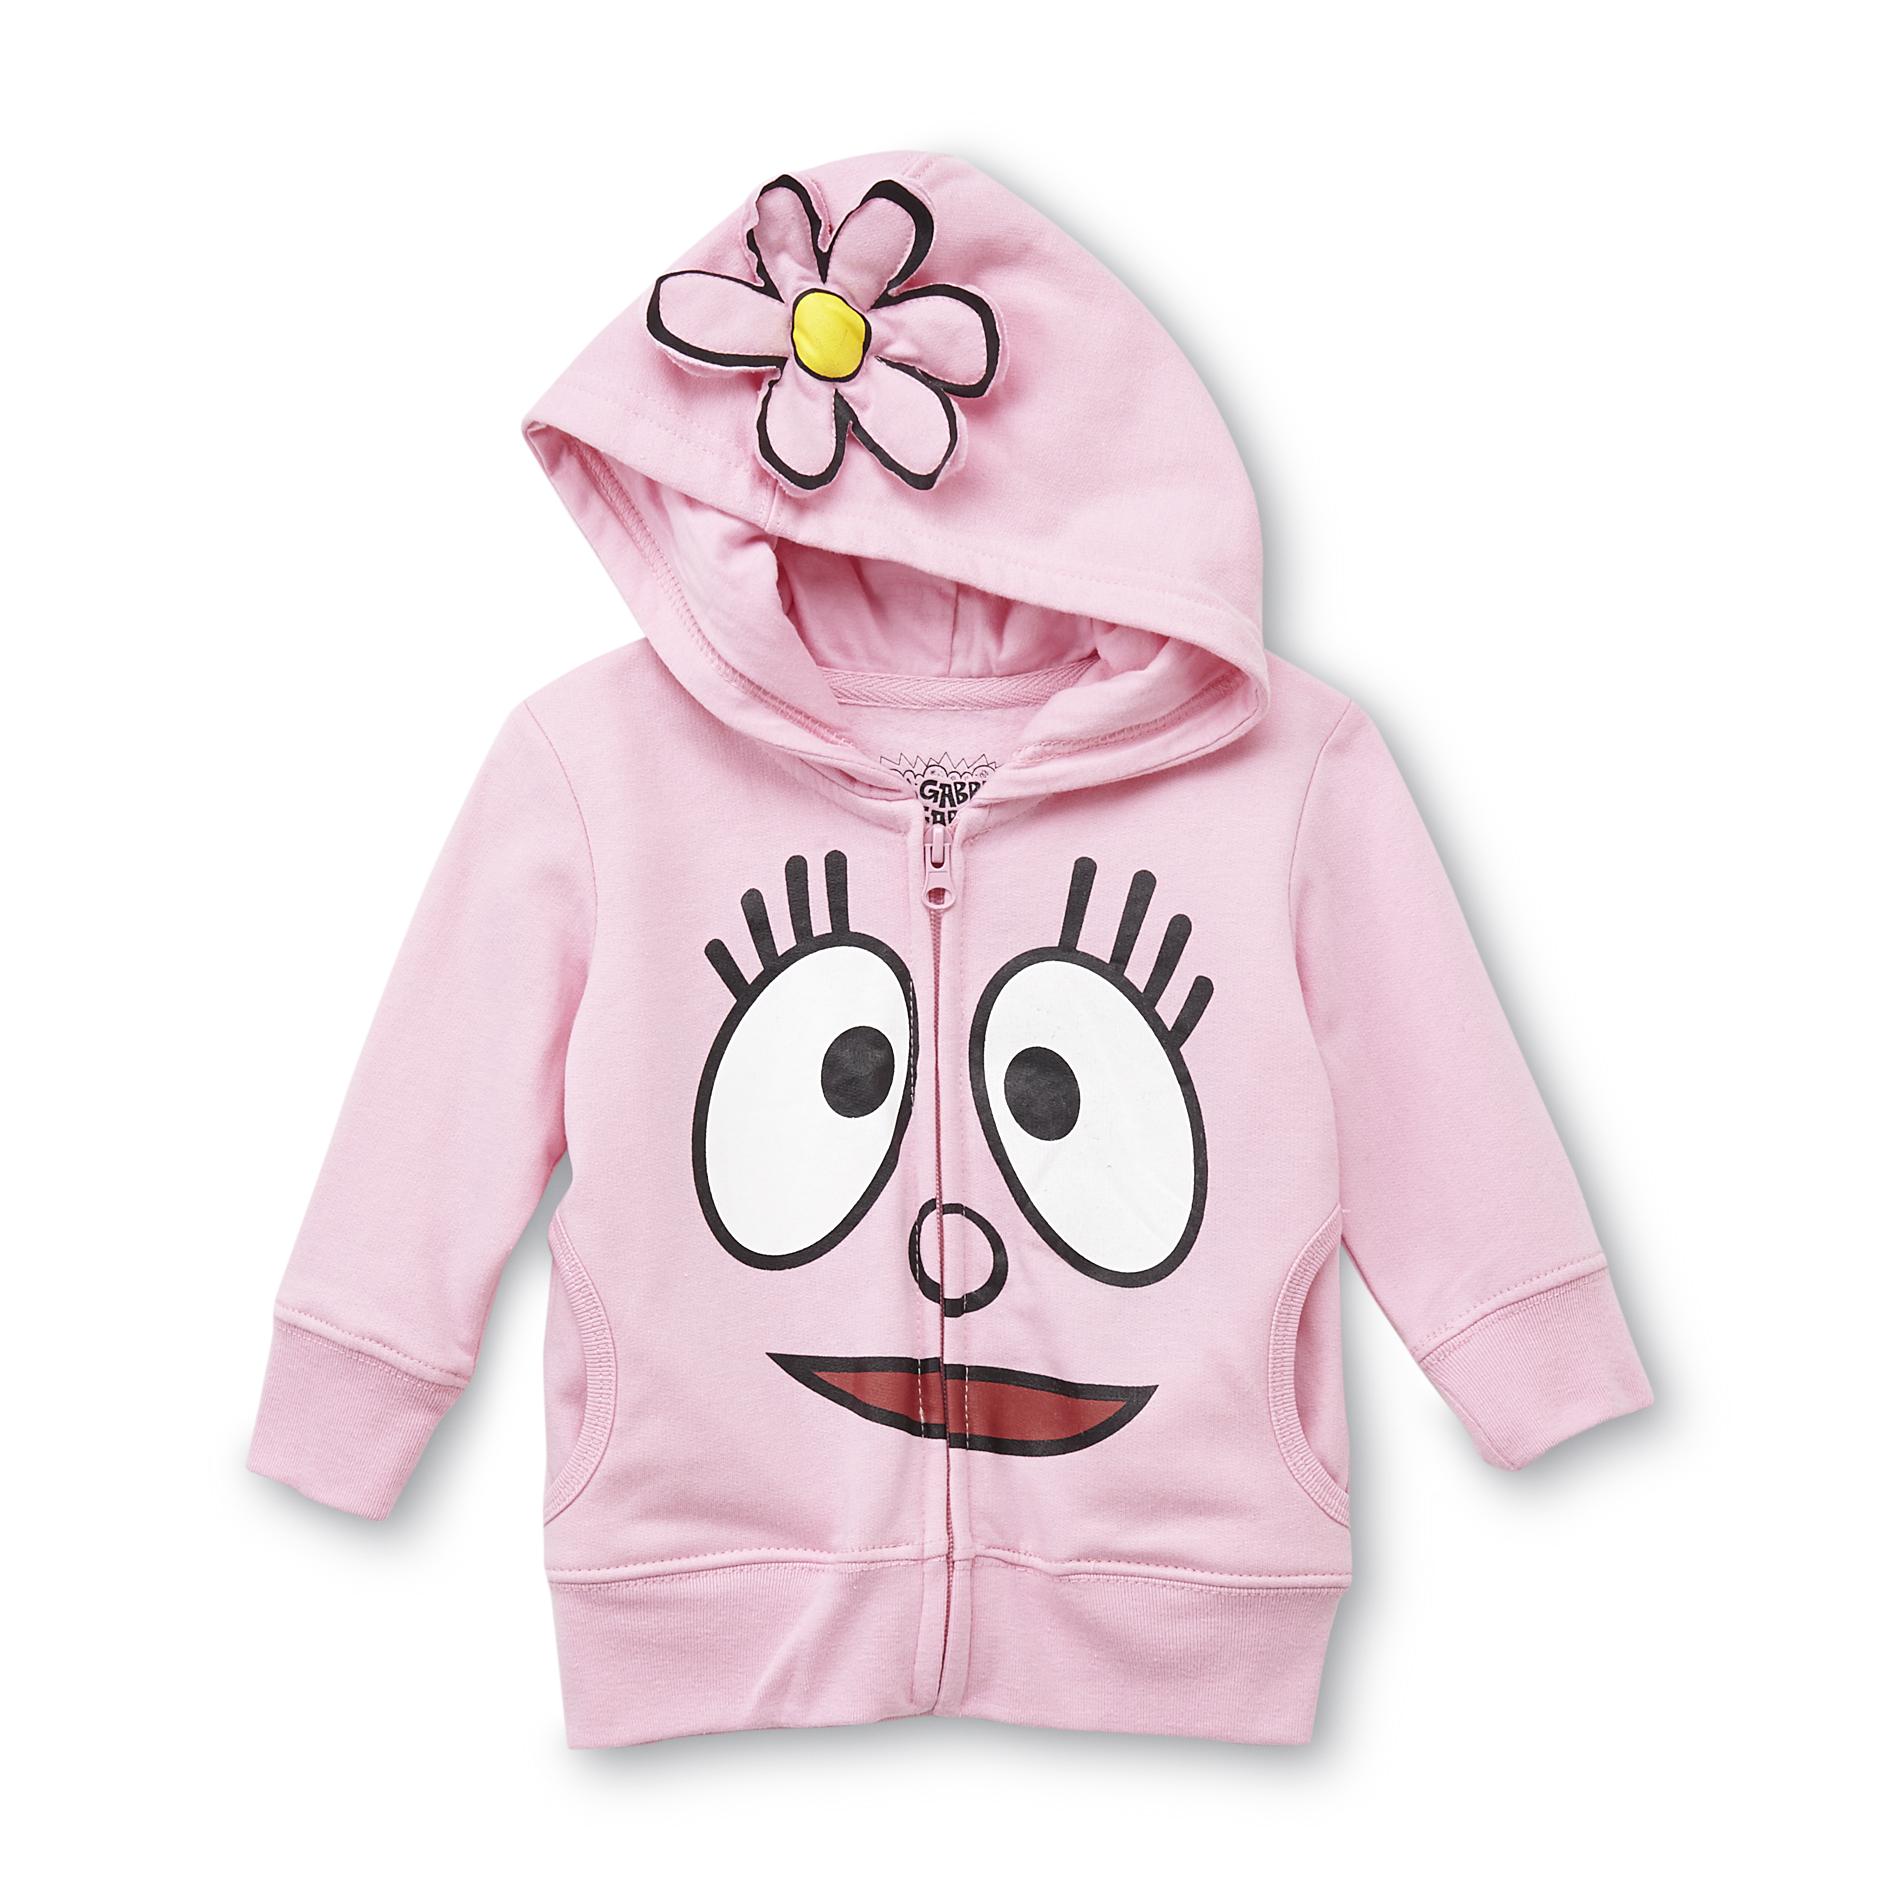 Nickelodeon Yo Gabba Gabba Infant & Toddler Girl's Hoodie Jacket - Foofa